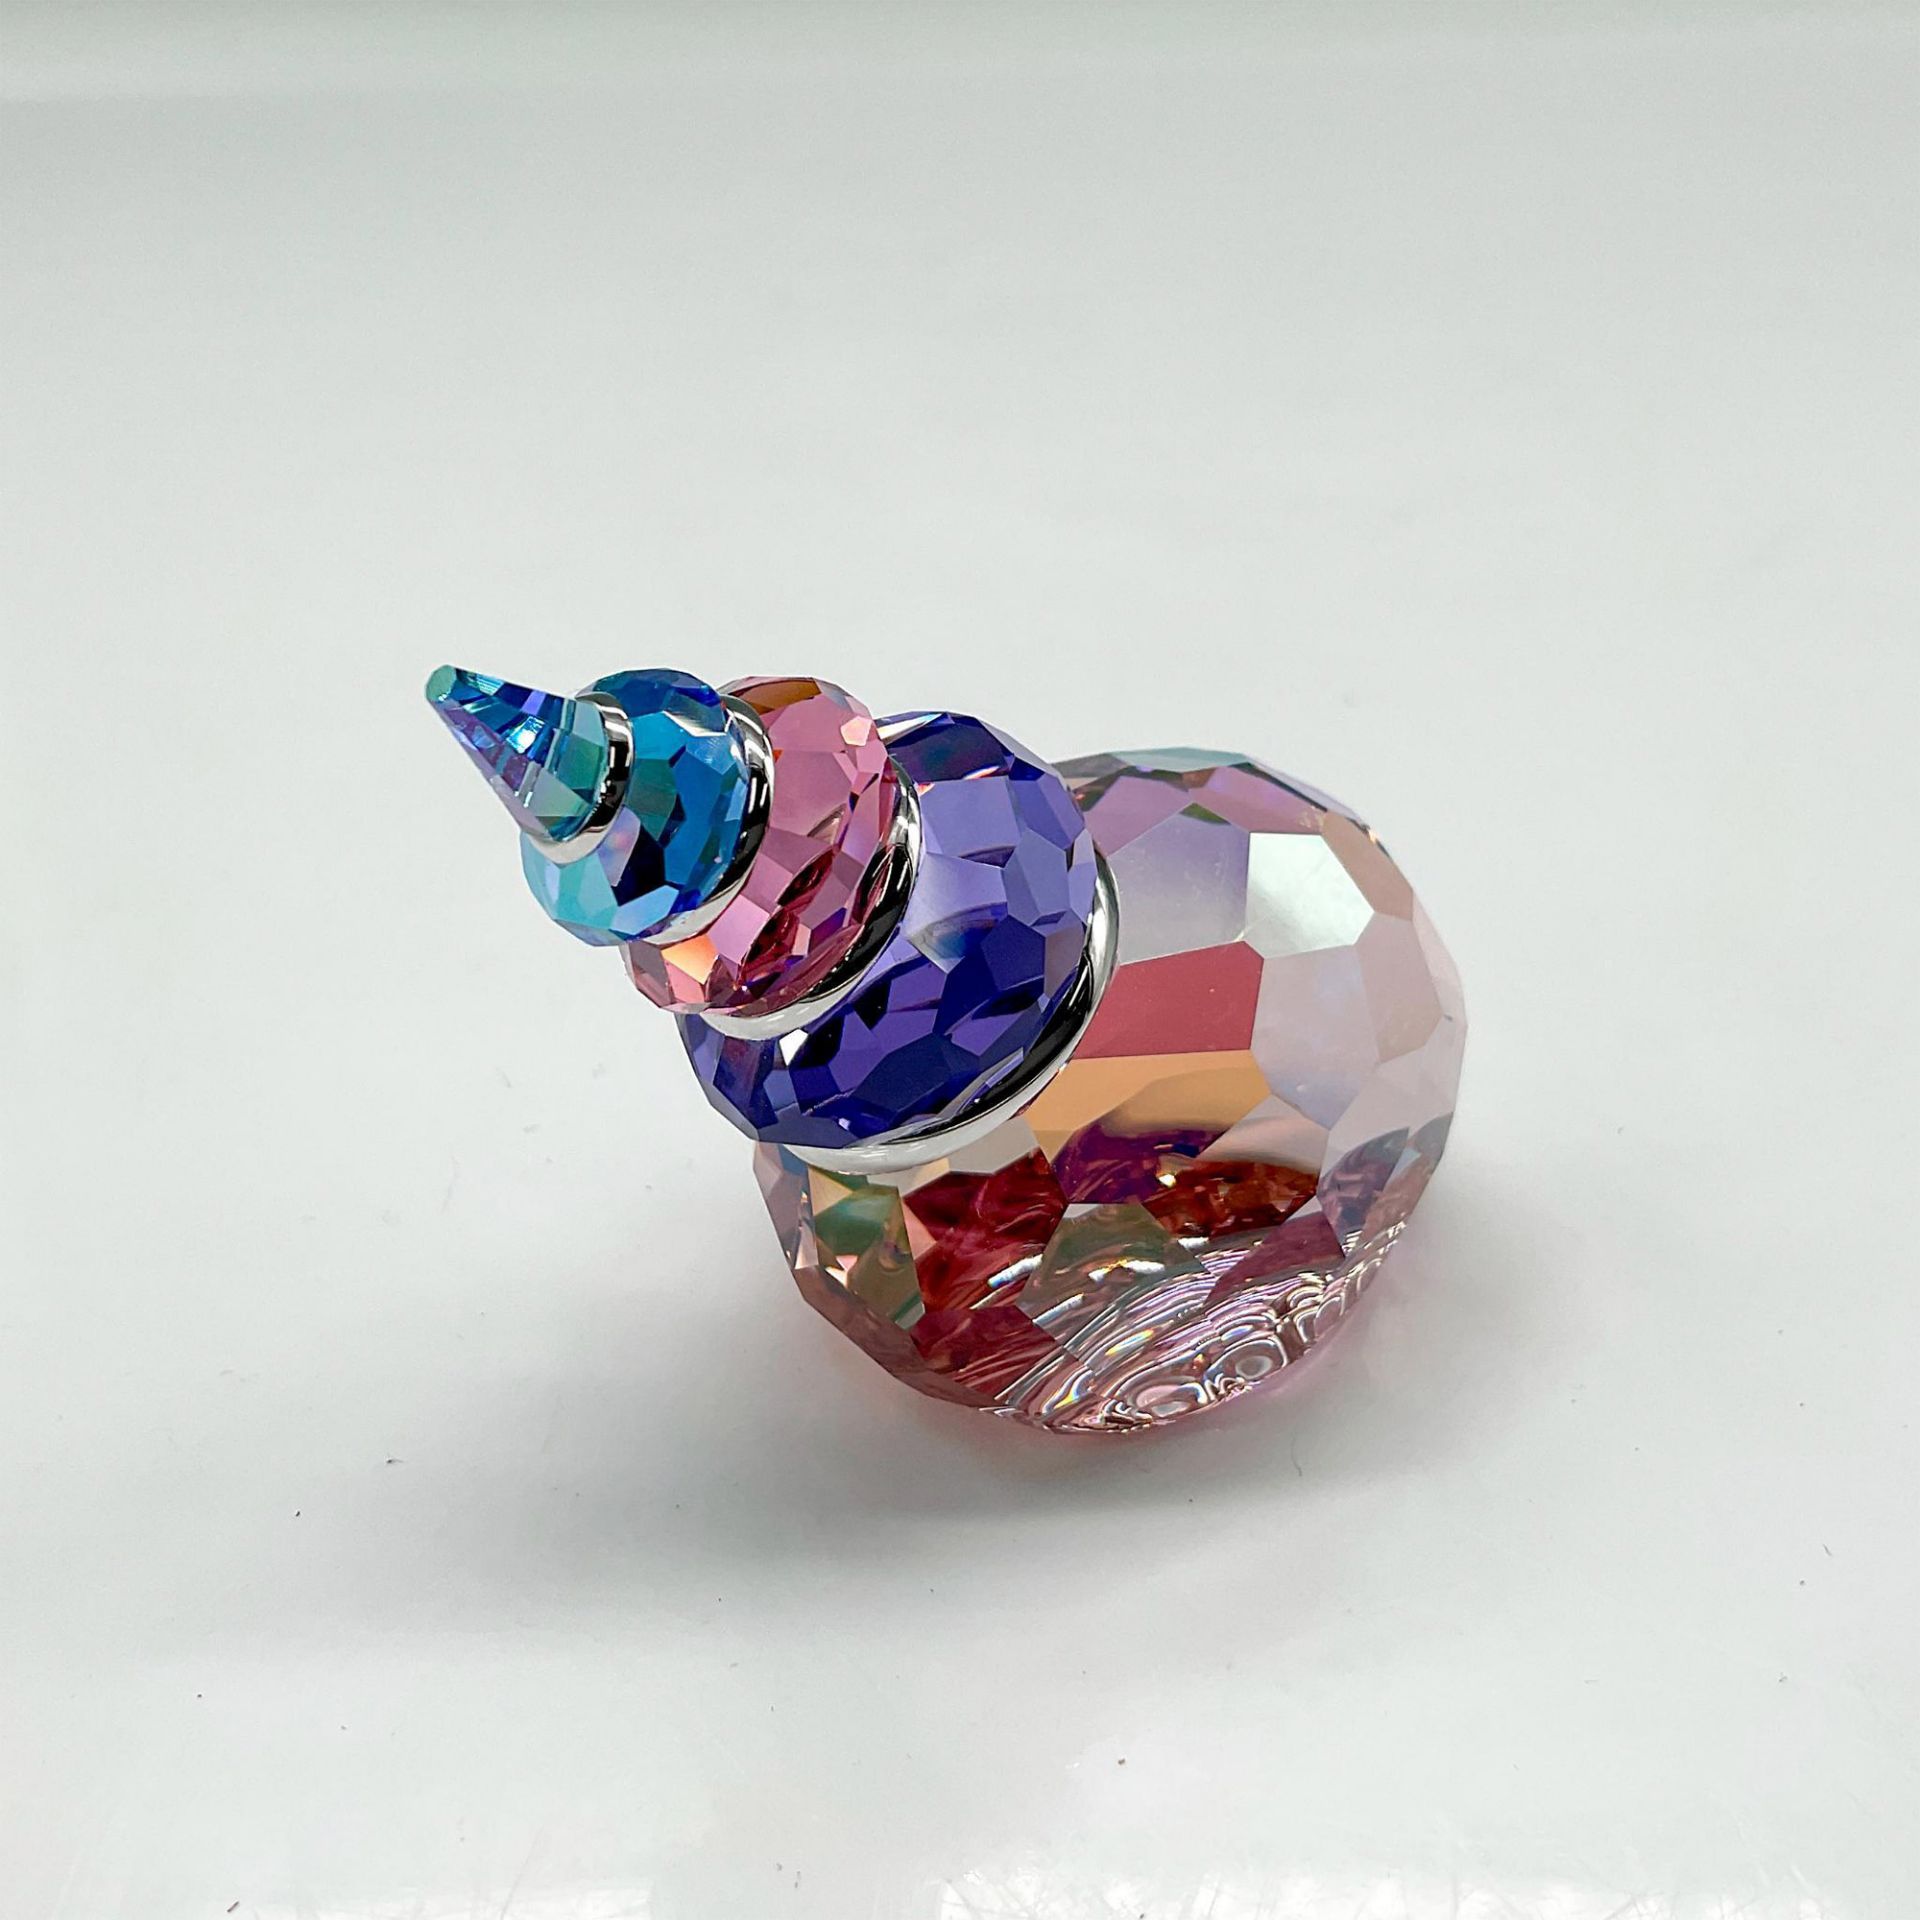 Swarovski Crystal Figurine, Blue Violet Corunna Shell - Image 2 of 4